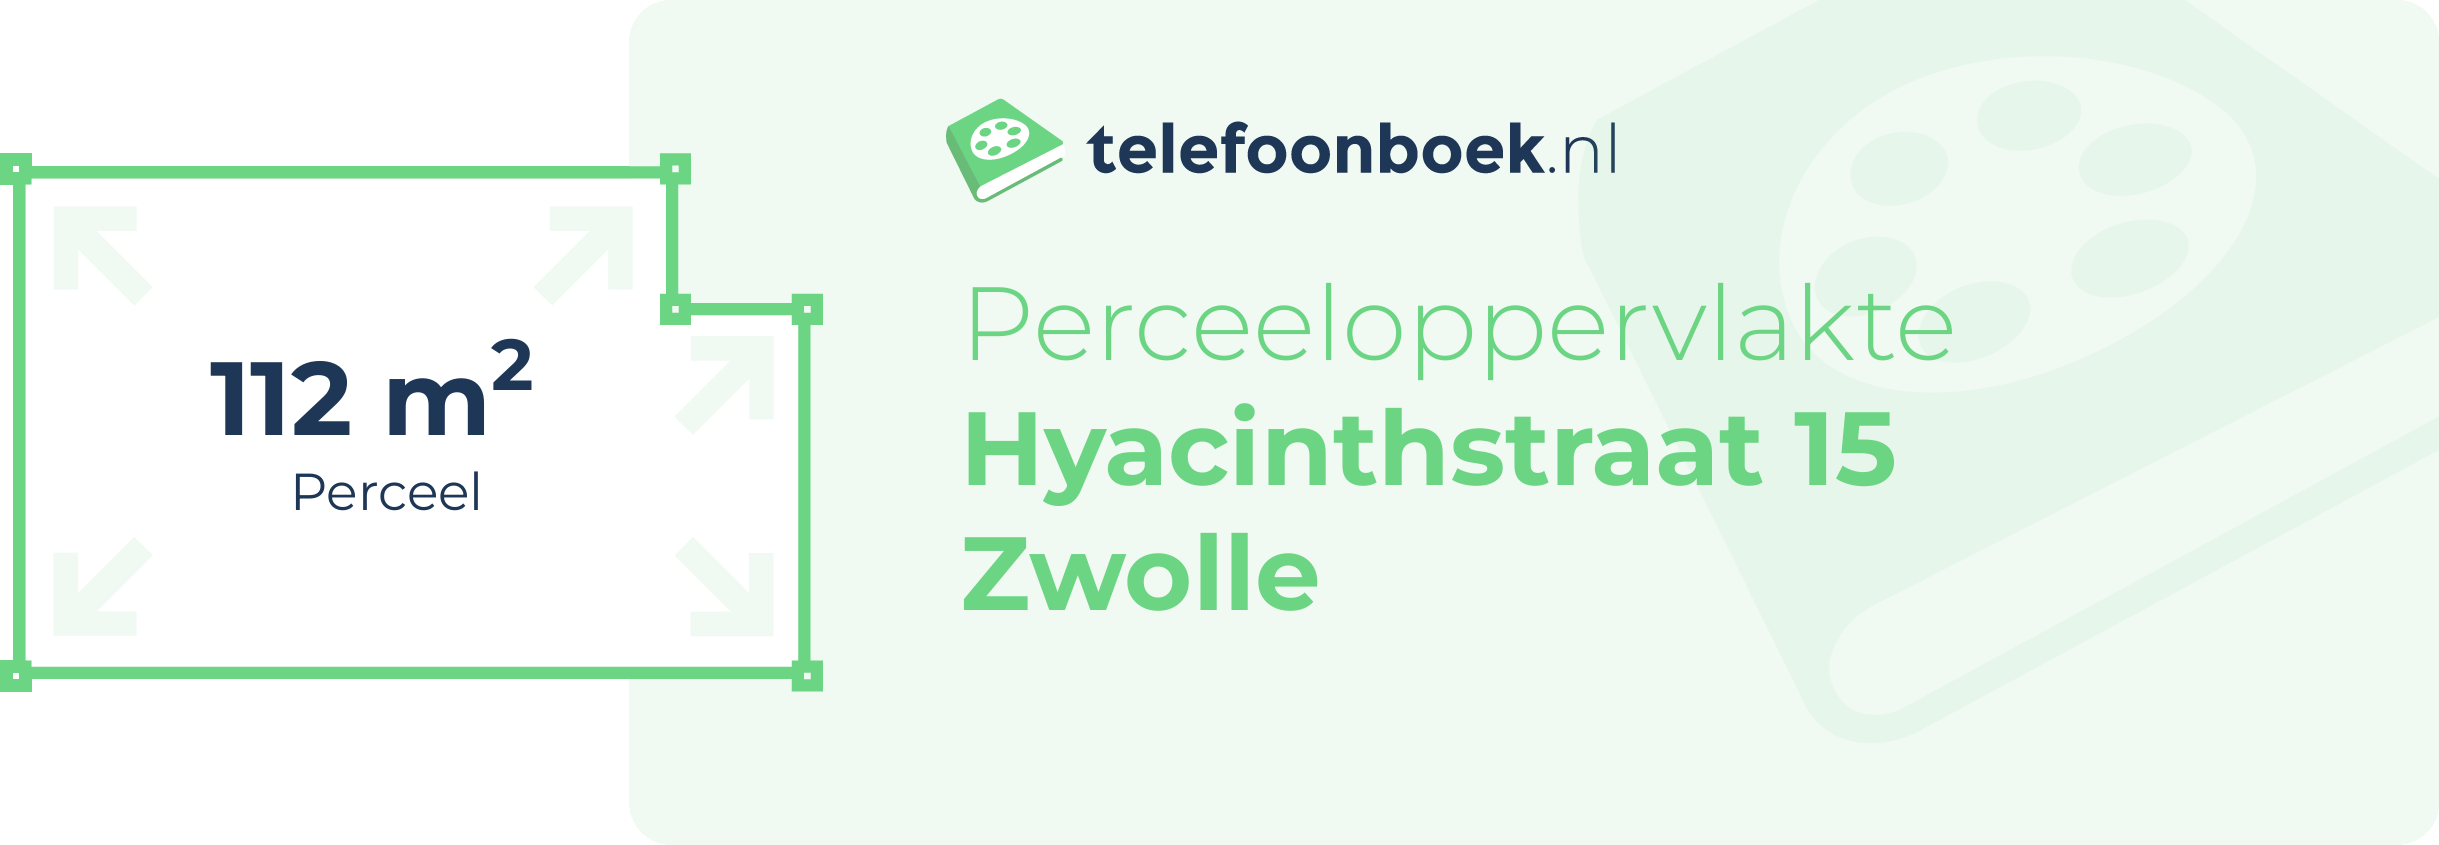 Perceeloppervlakte Hyacinthstraat 15 Zwolle